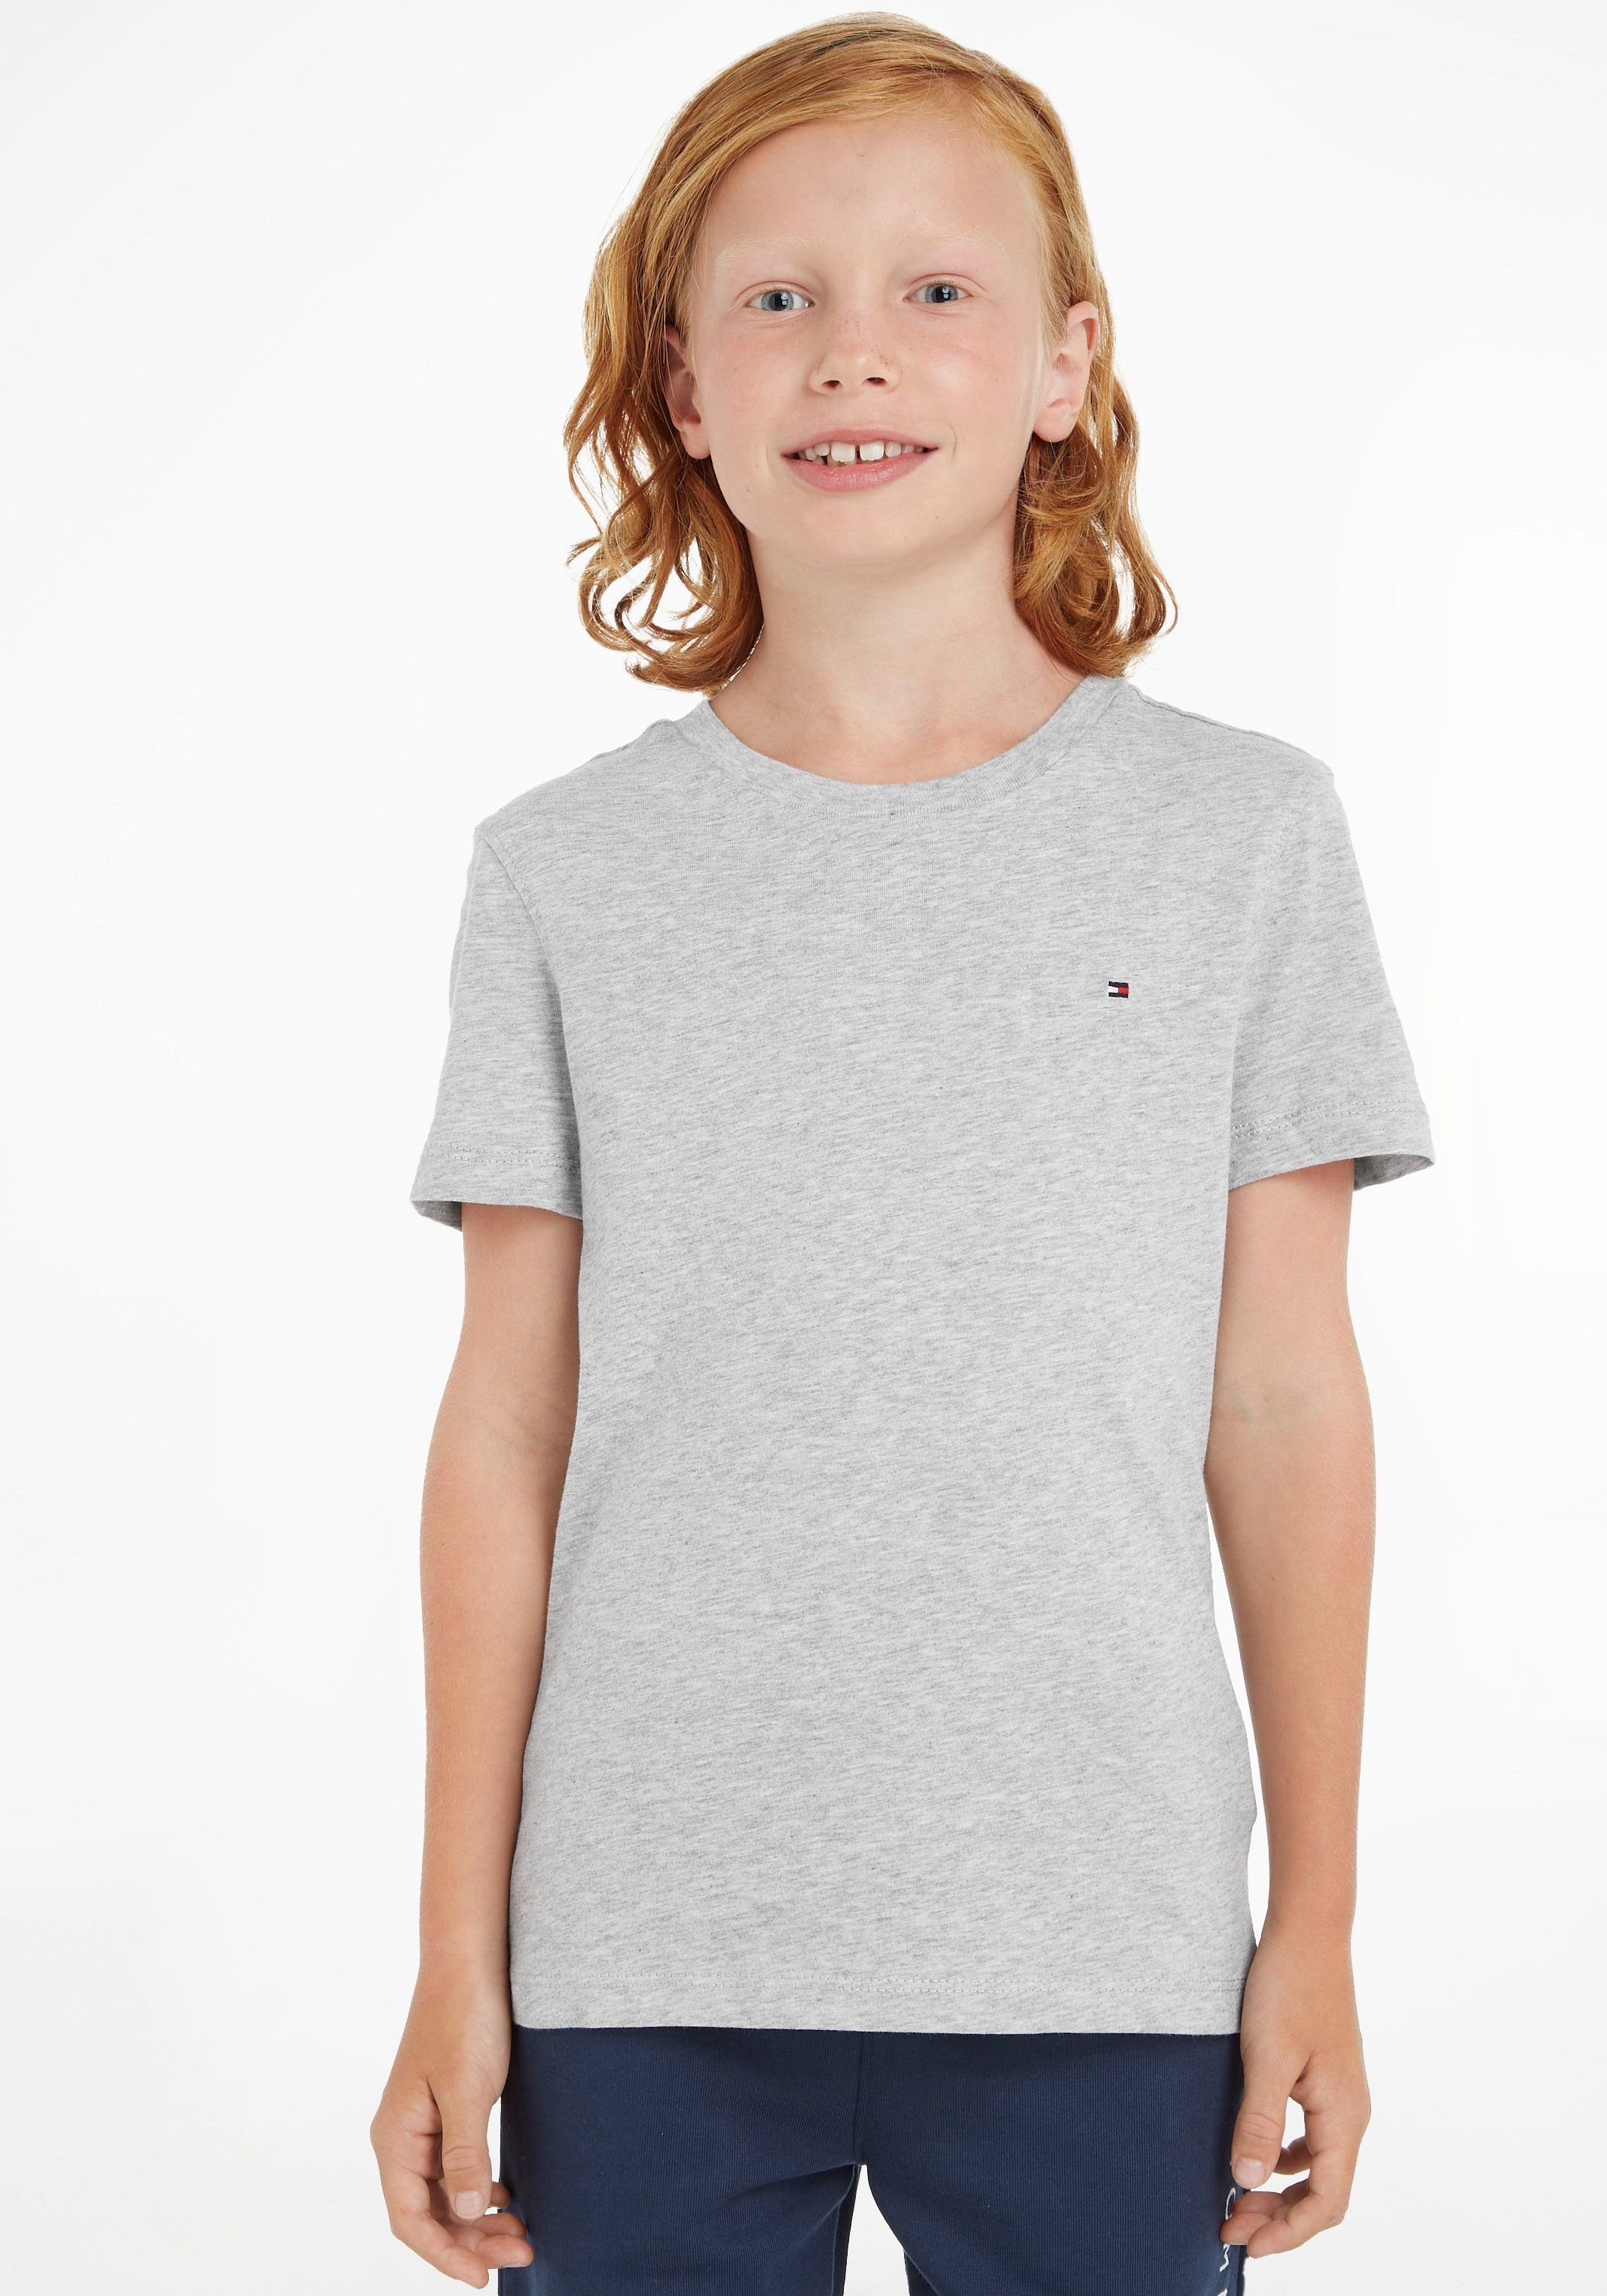 CN T-Shirt KNIT BOYS Jungen Tommy Hilfiger für BASIC